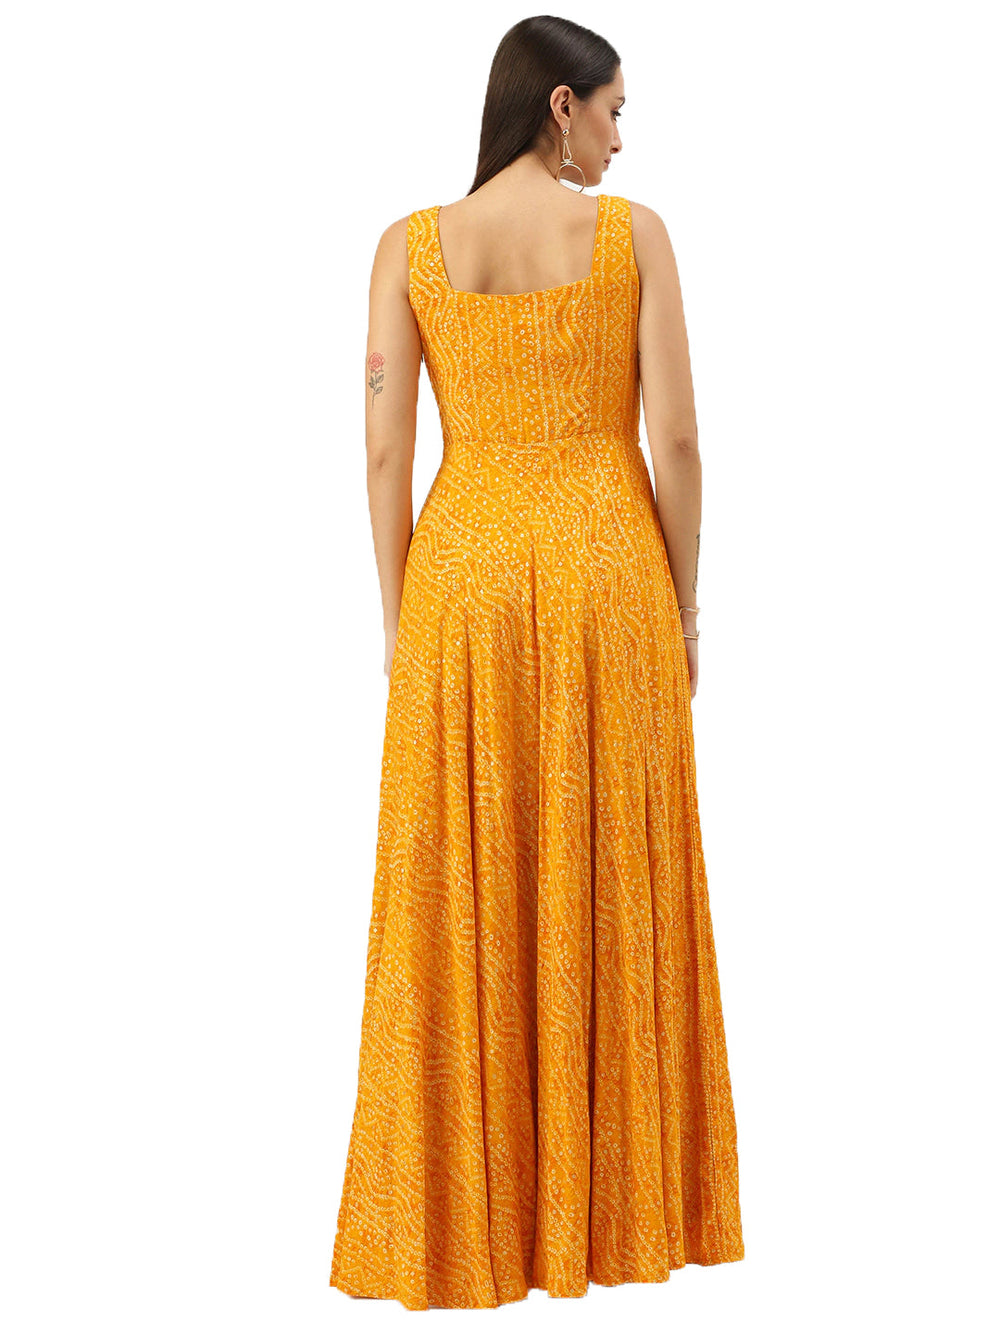 Yellow-Printed-Strap-Neck-Dress